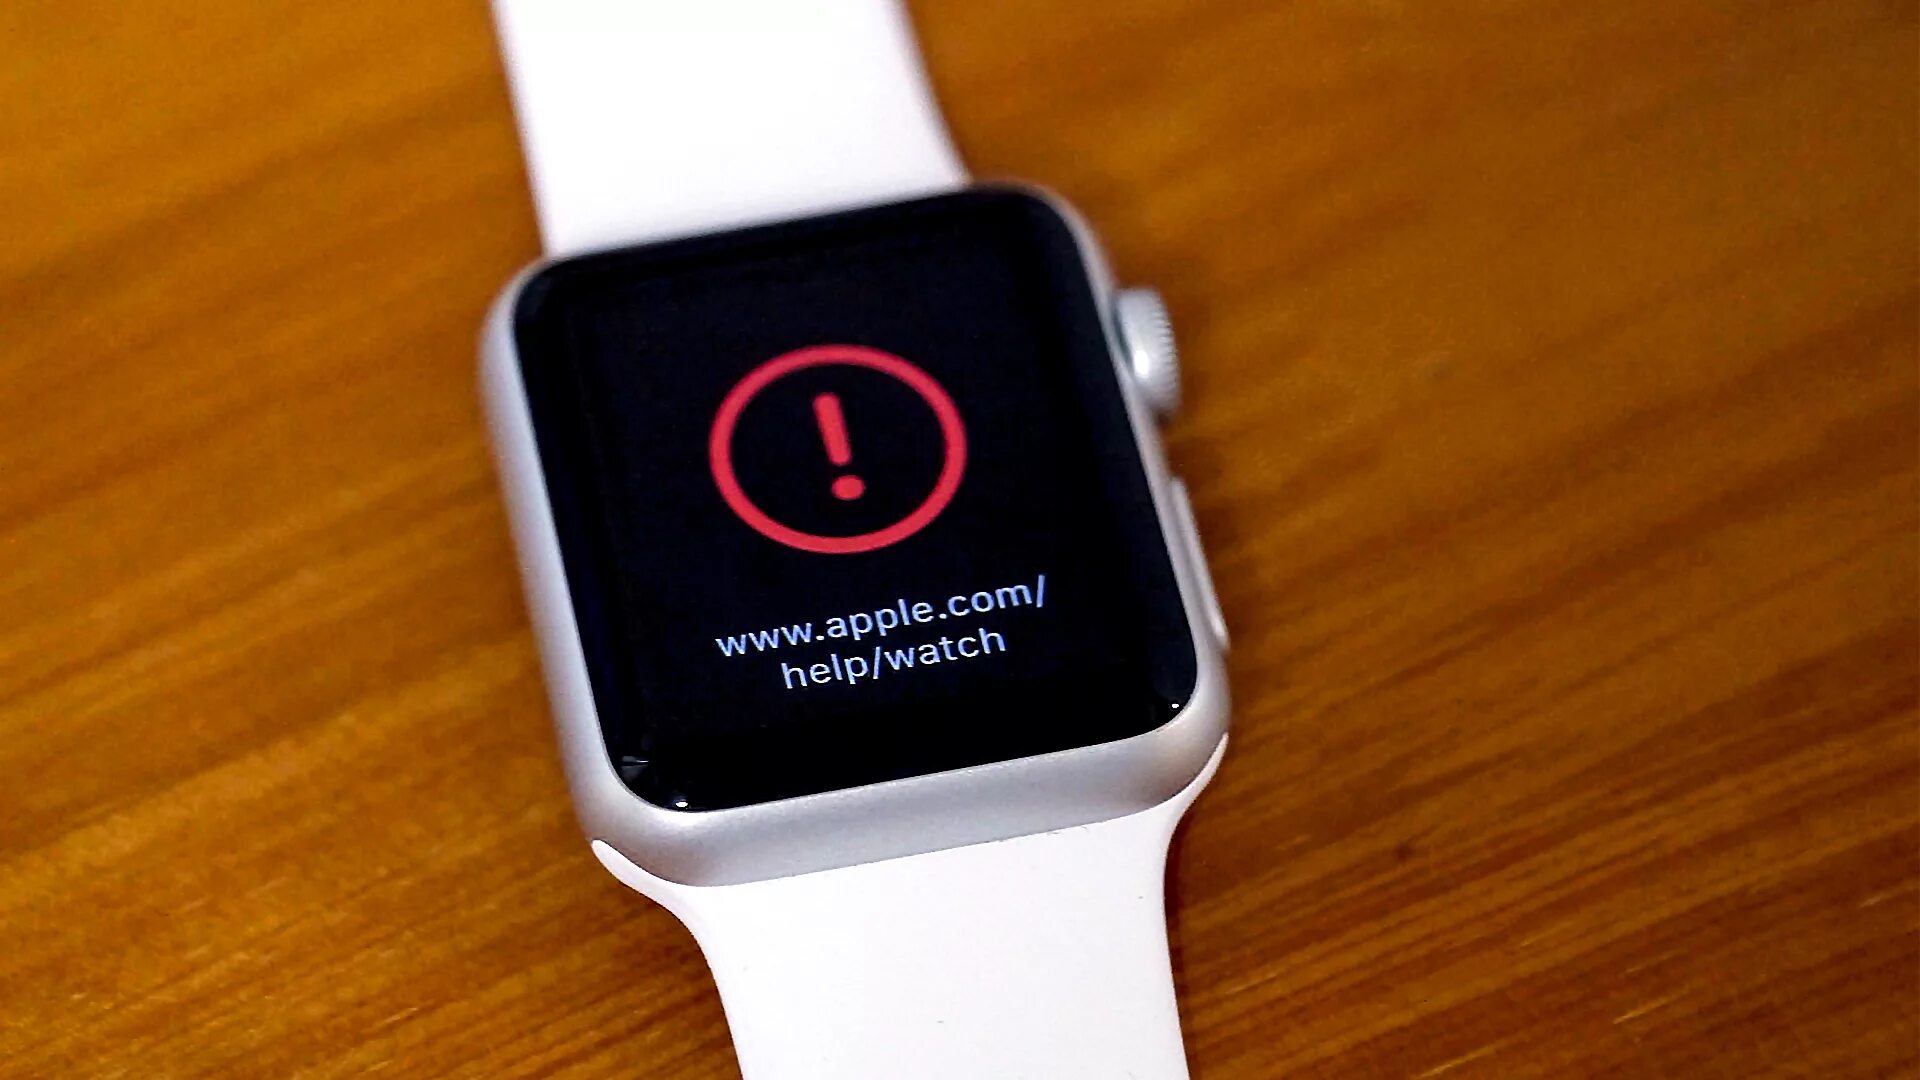 Apple watch 1. Эпл вотч 3. Apple IWATCH Ultra. Обновленные часы айфон. Обновление часов apple